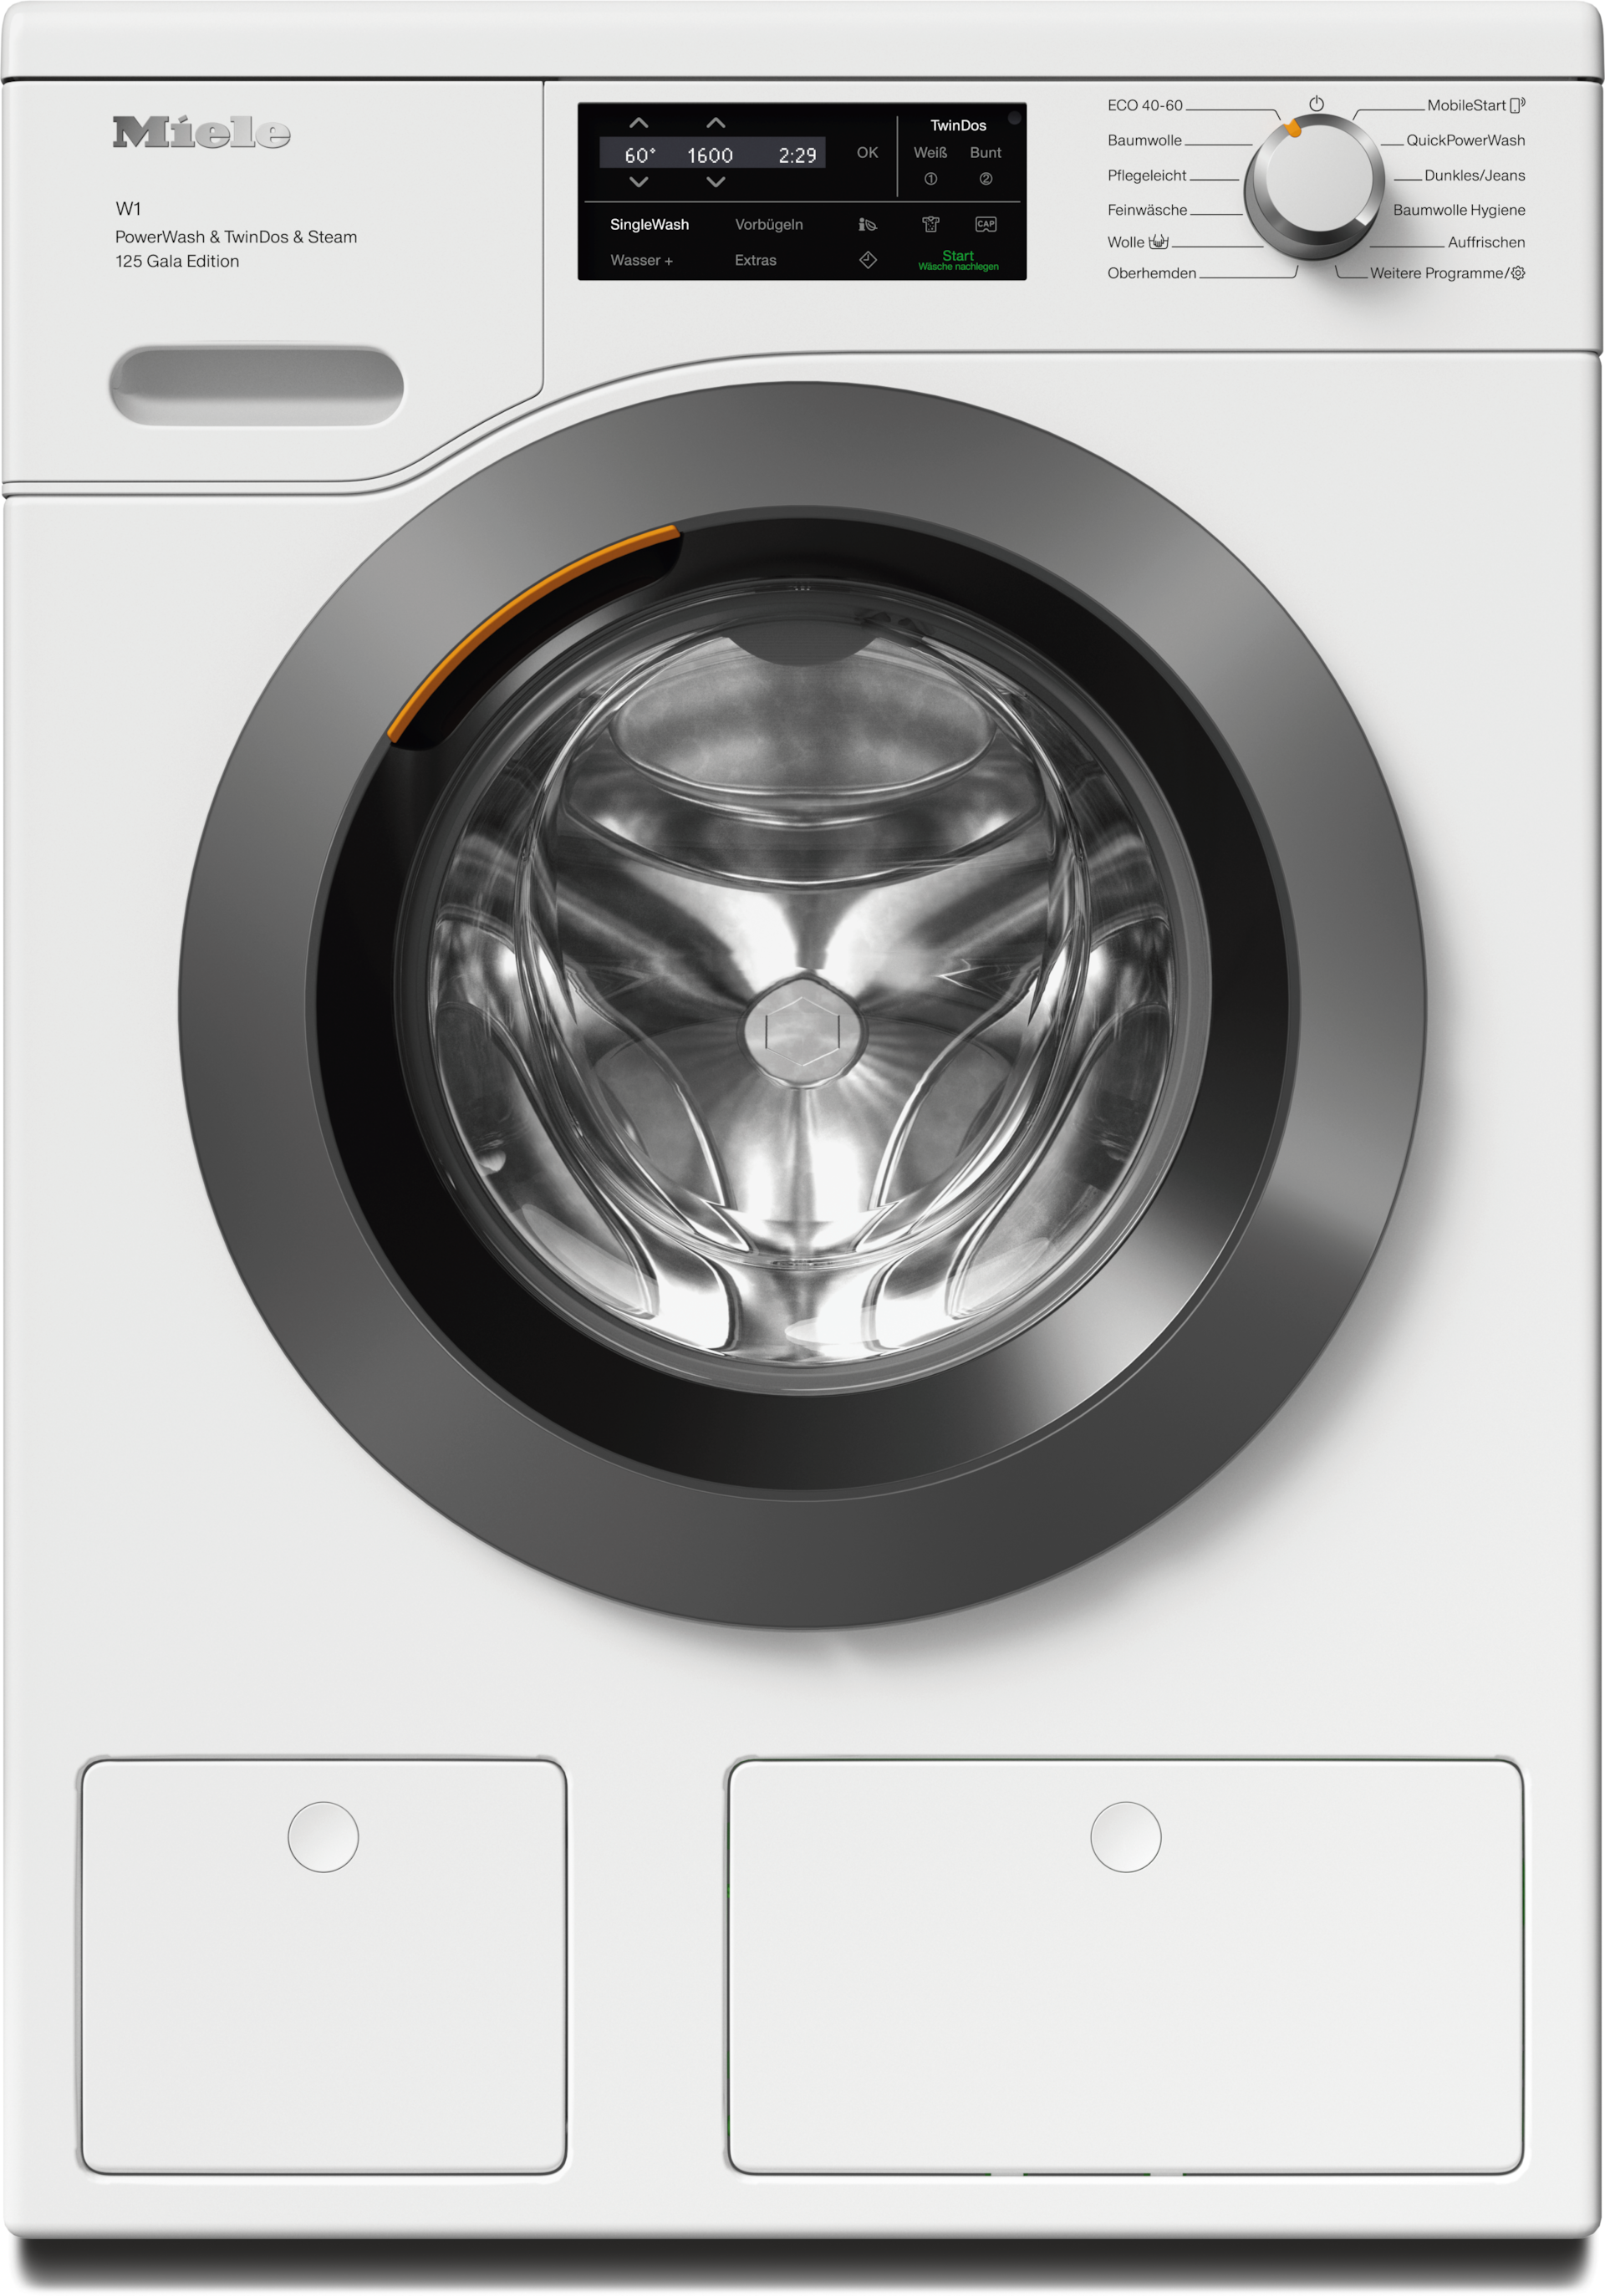 Waschmaschinen - WCI880 WPS 125 Gala Edition Lotosweiß - 1